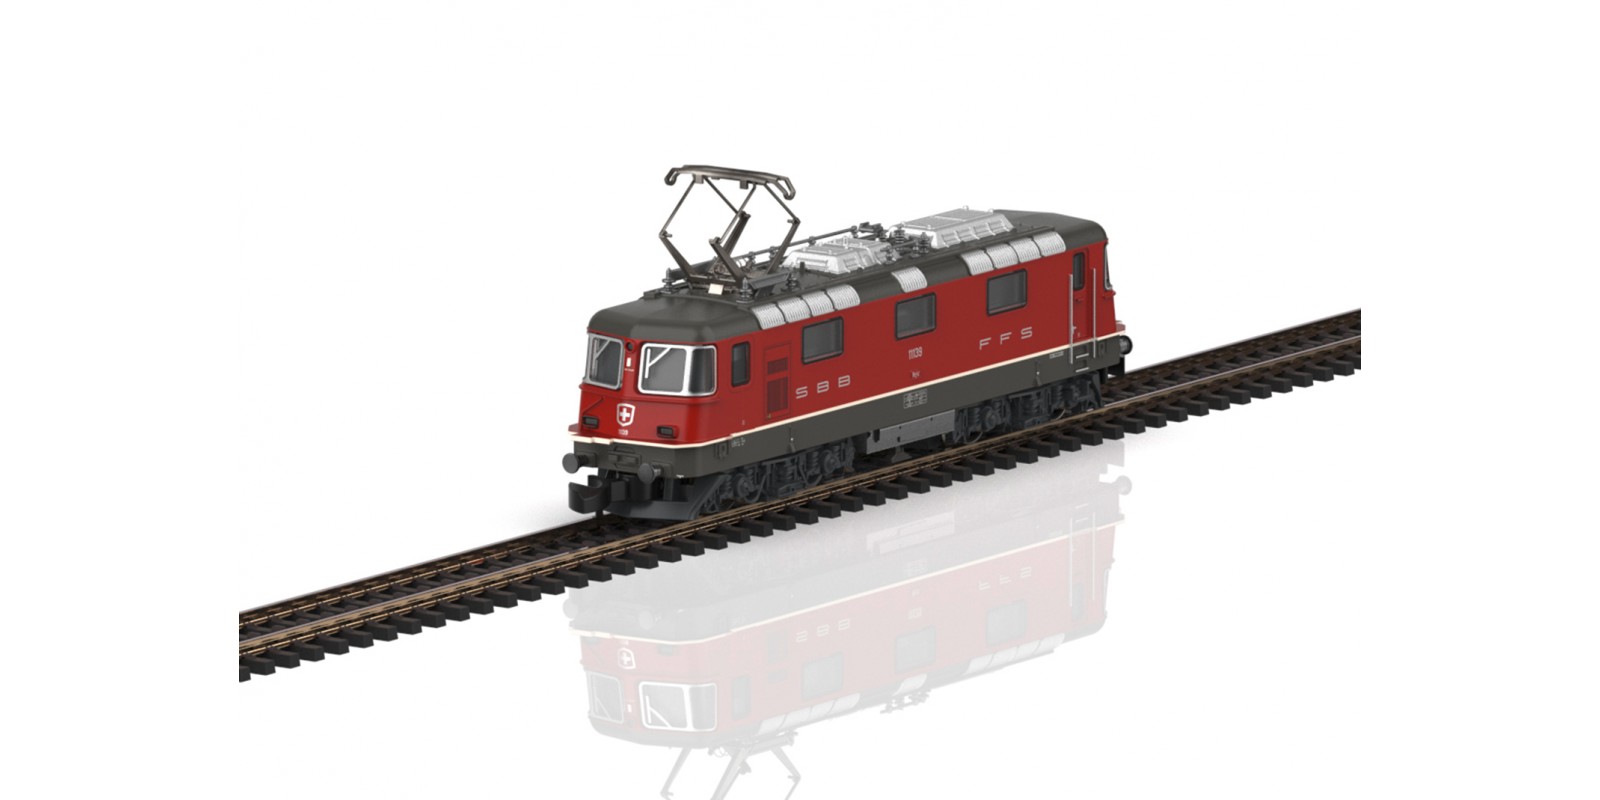 88594 Class Re 4/4 II Electric Locomotive